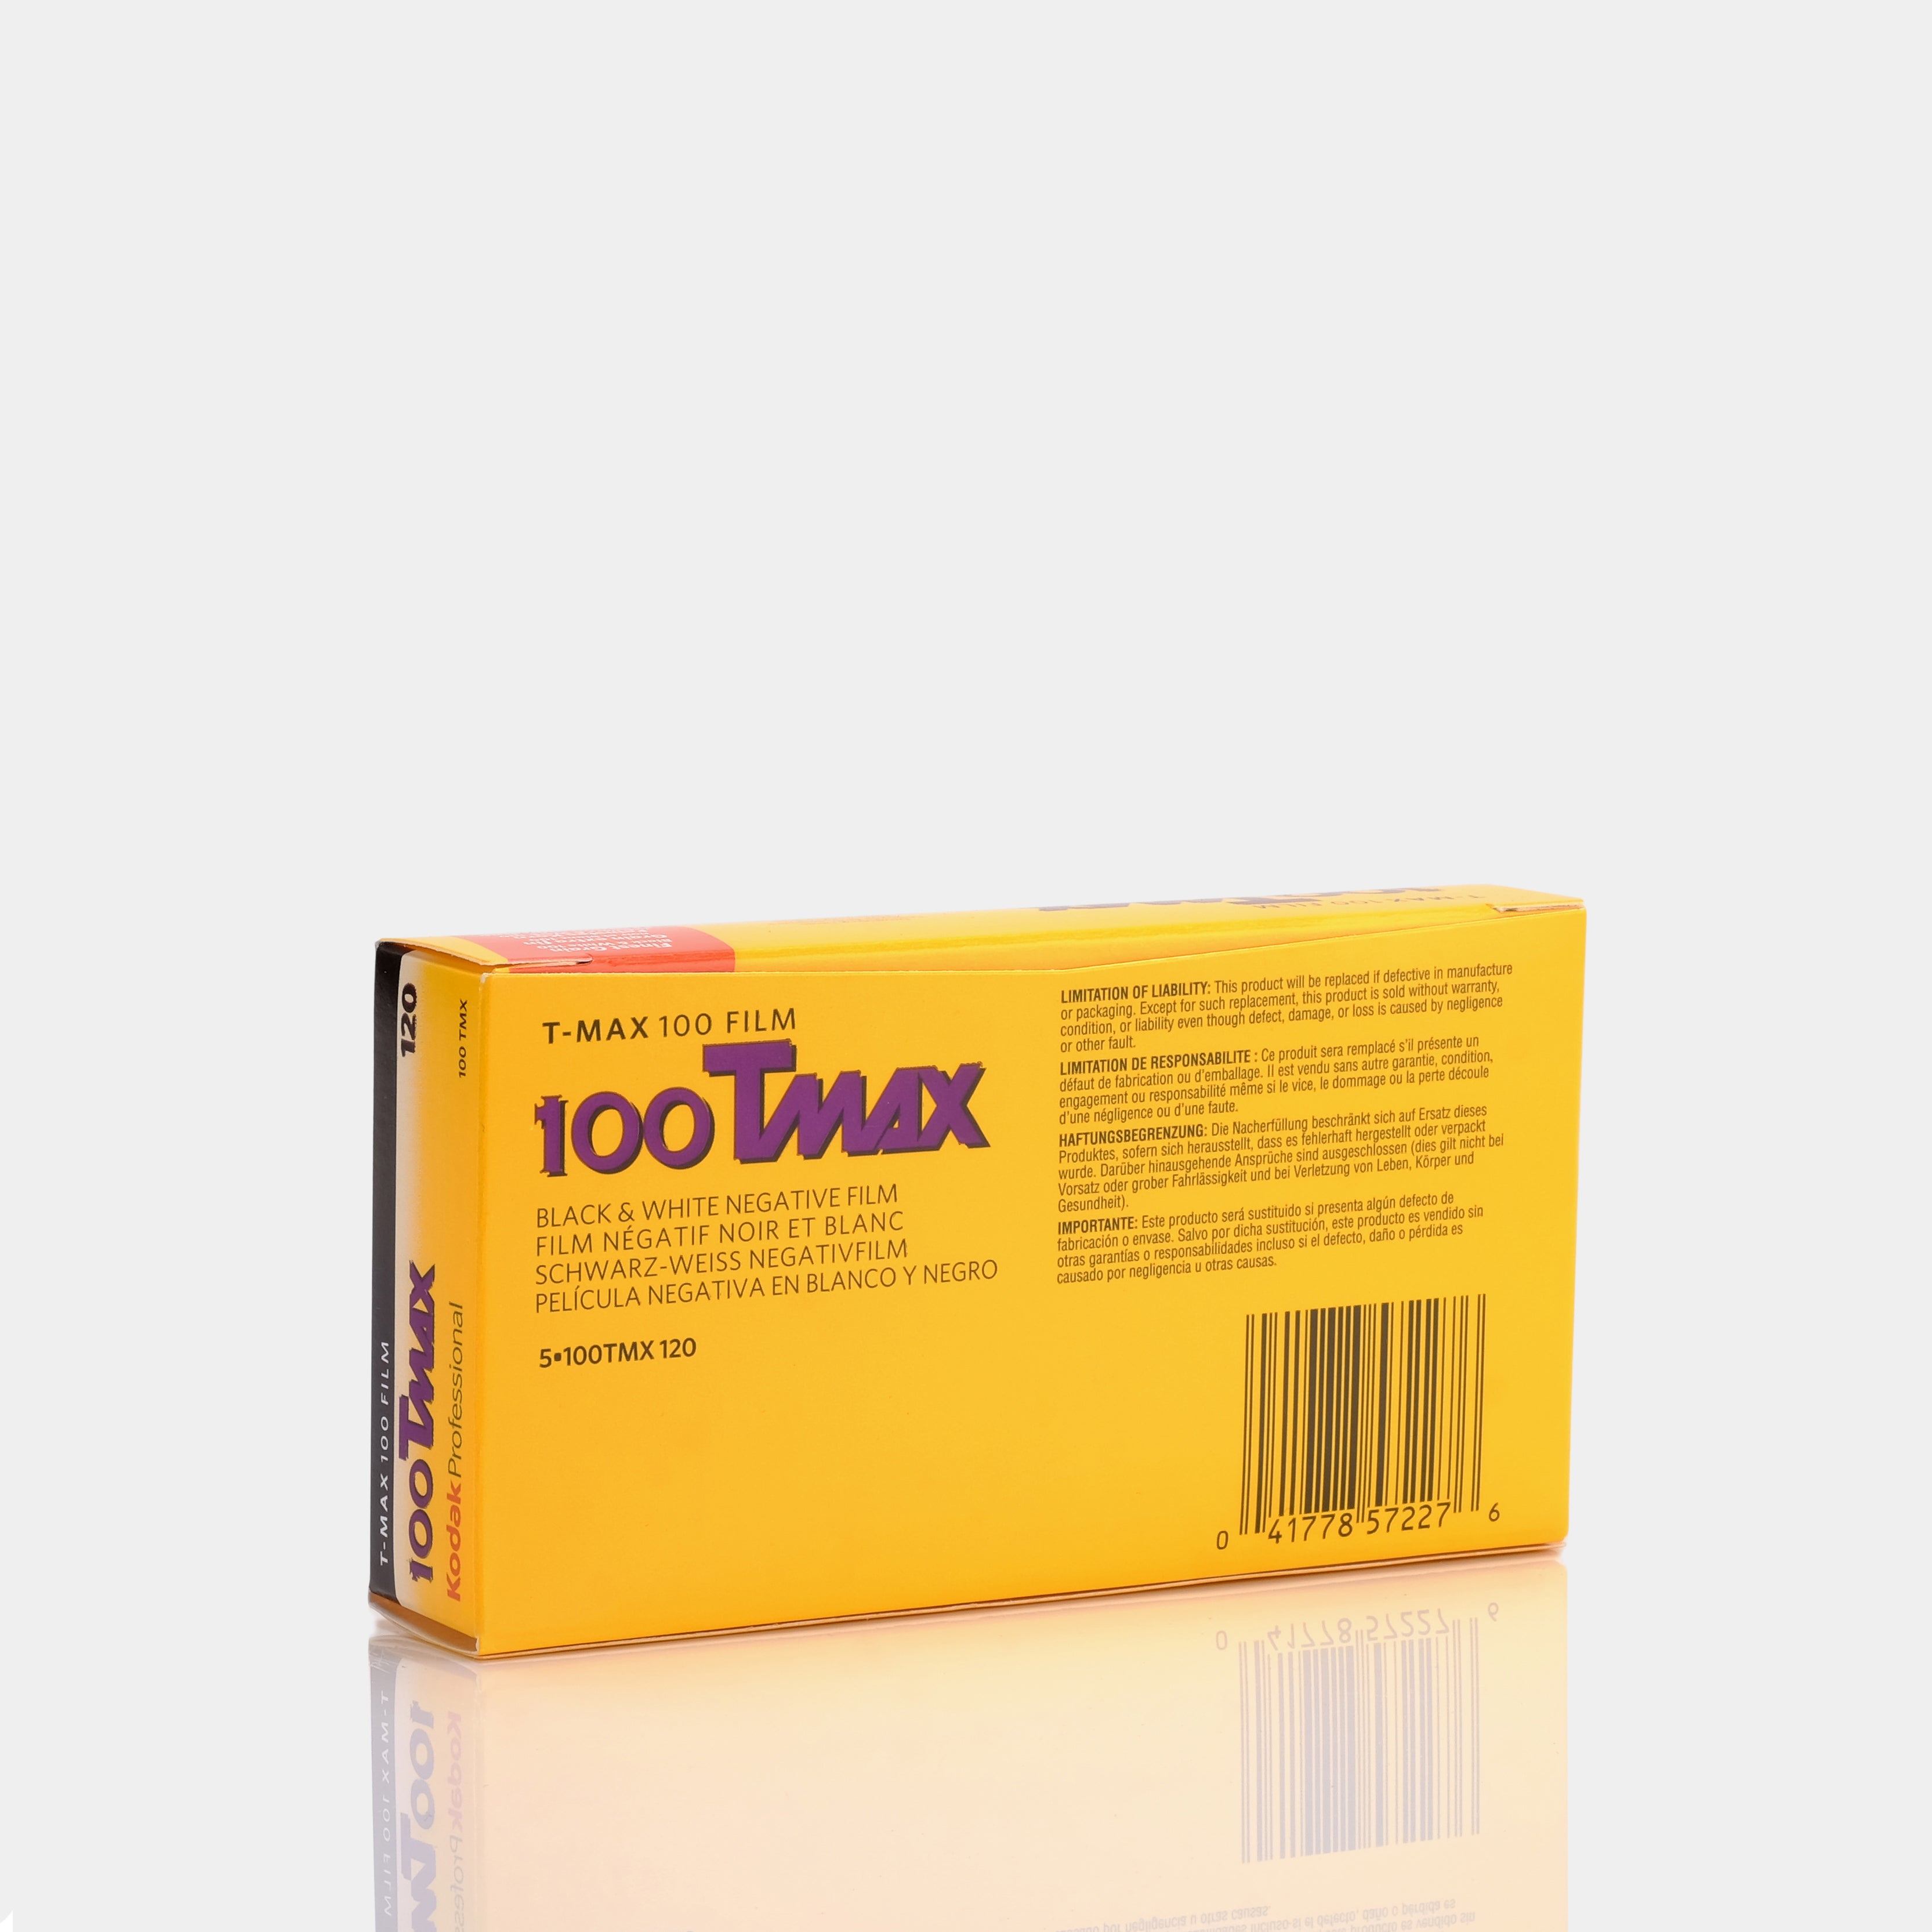 Expired Kodak Professional T-MAX 100 Black and White 120 Film - 5 Pack